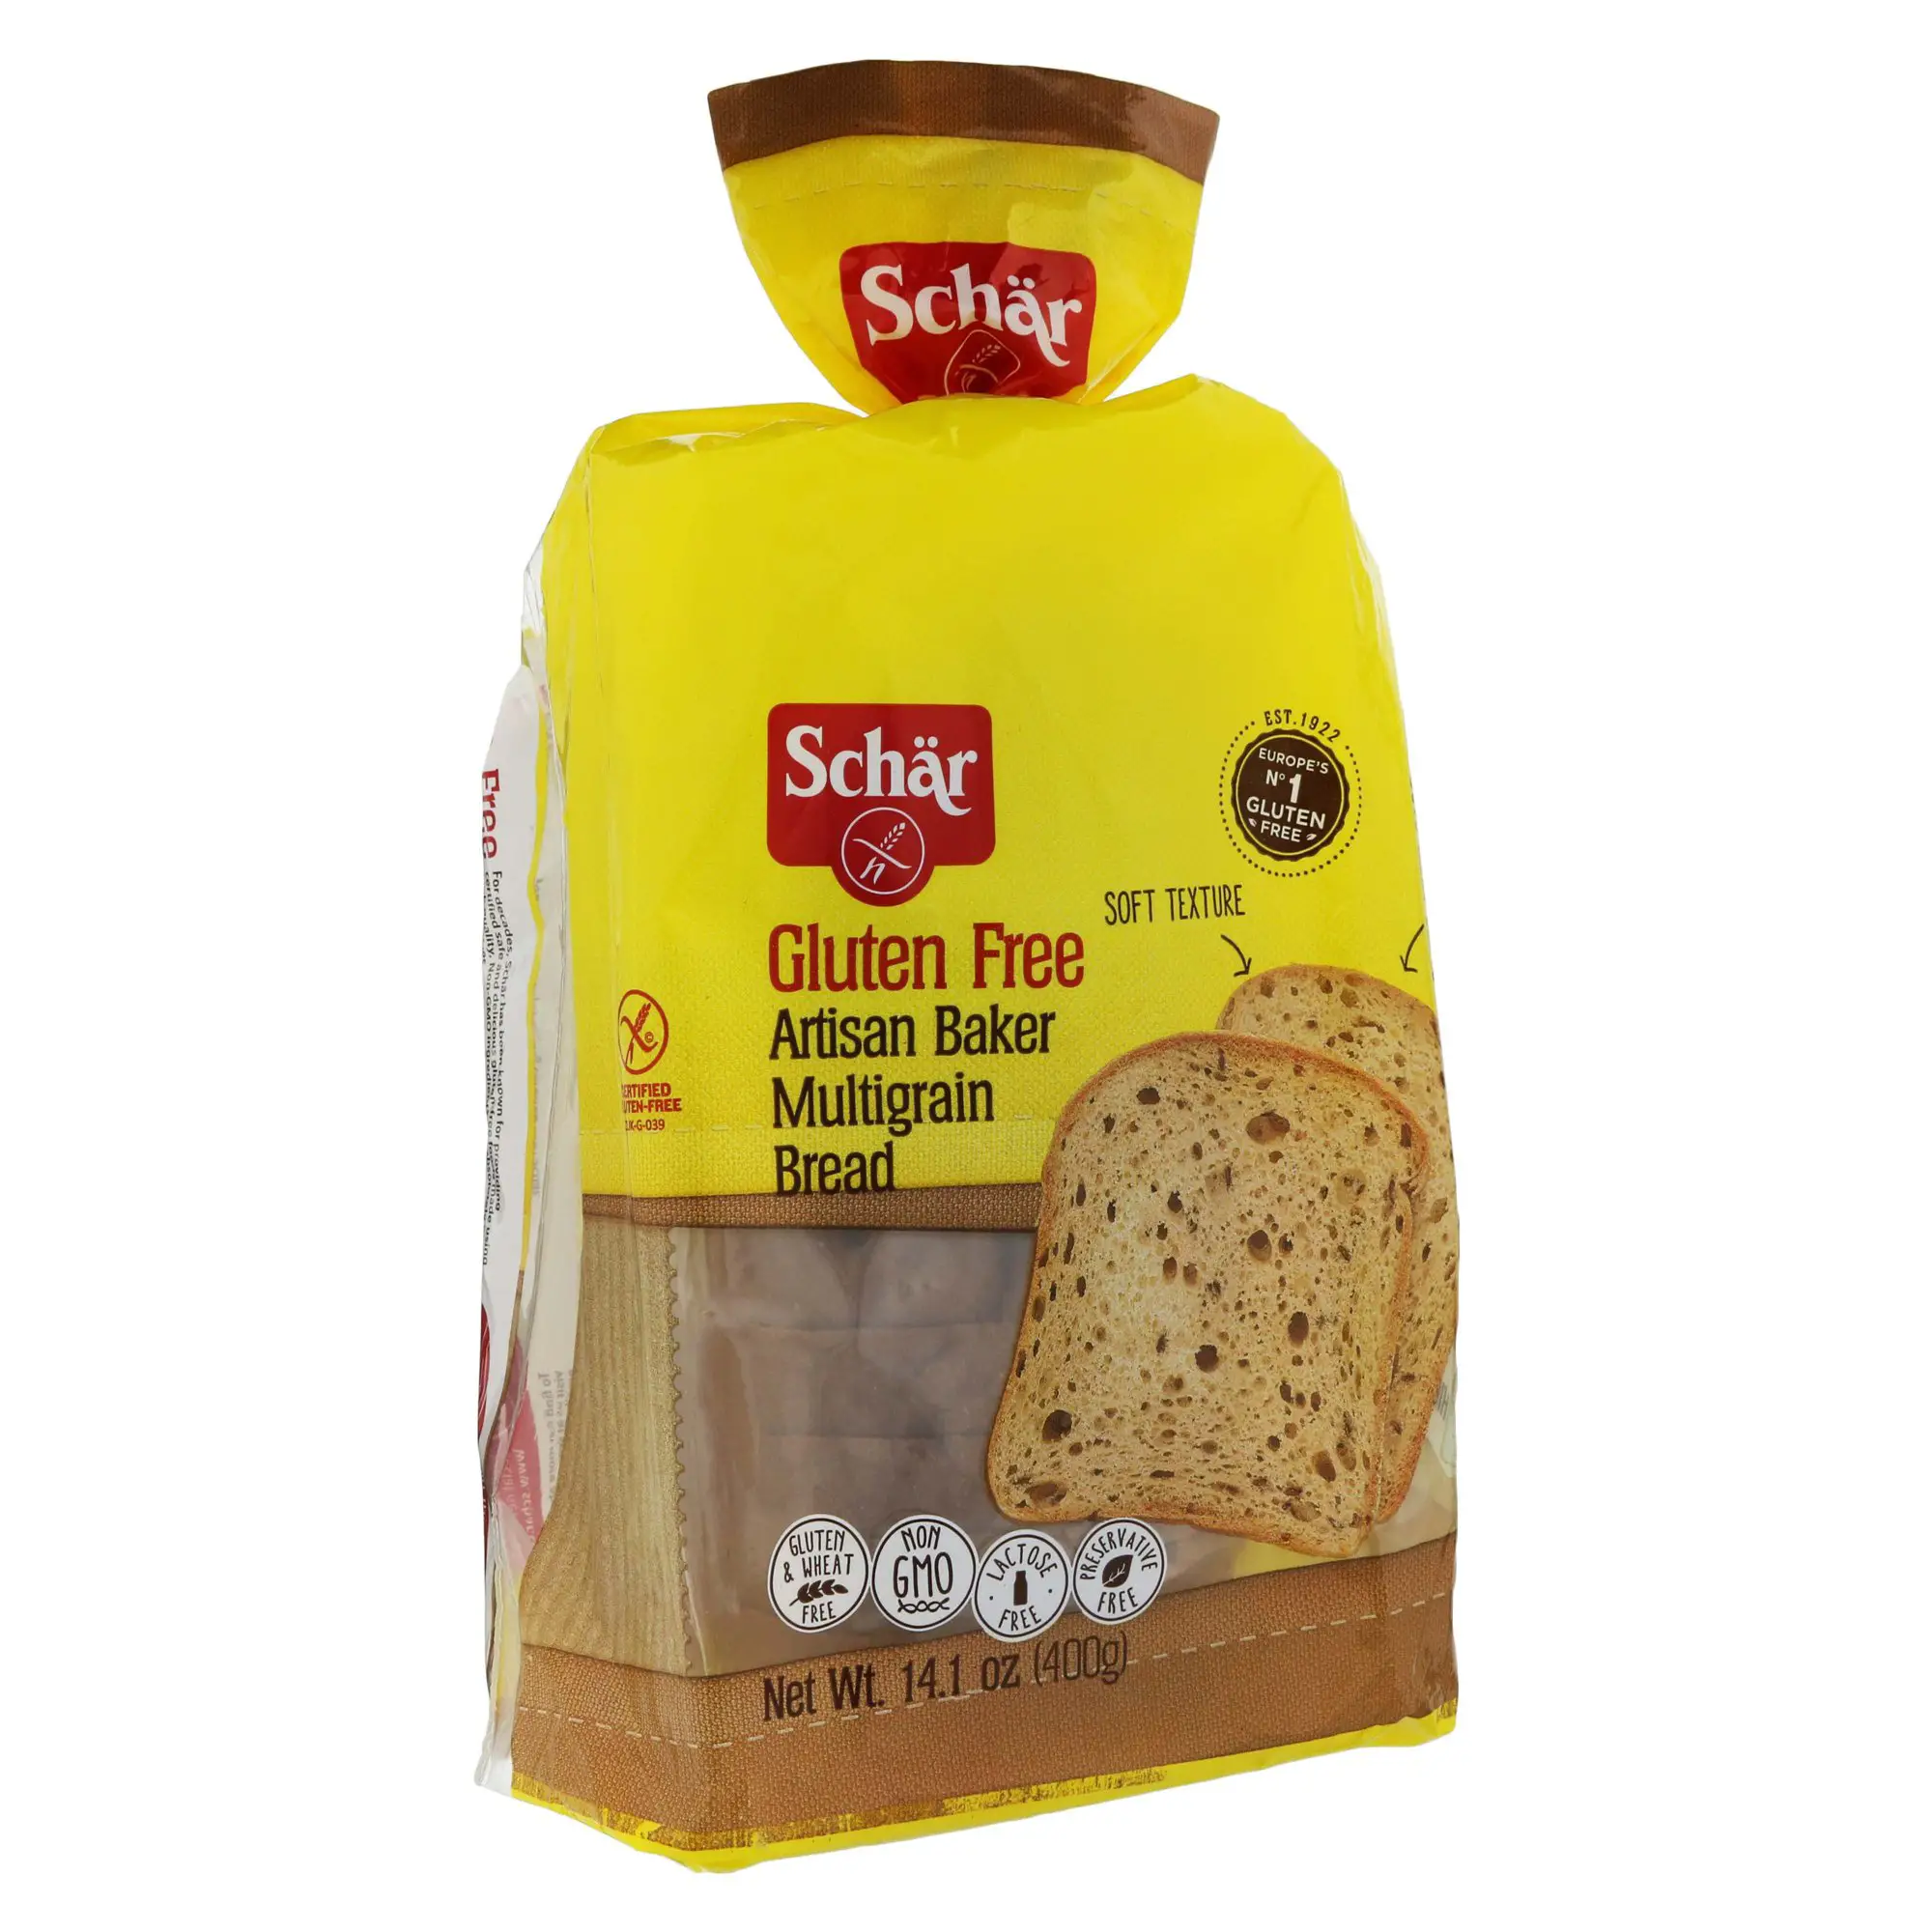 Schar Artisan Baker Multigrain Gluten Free Bread